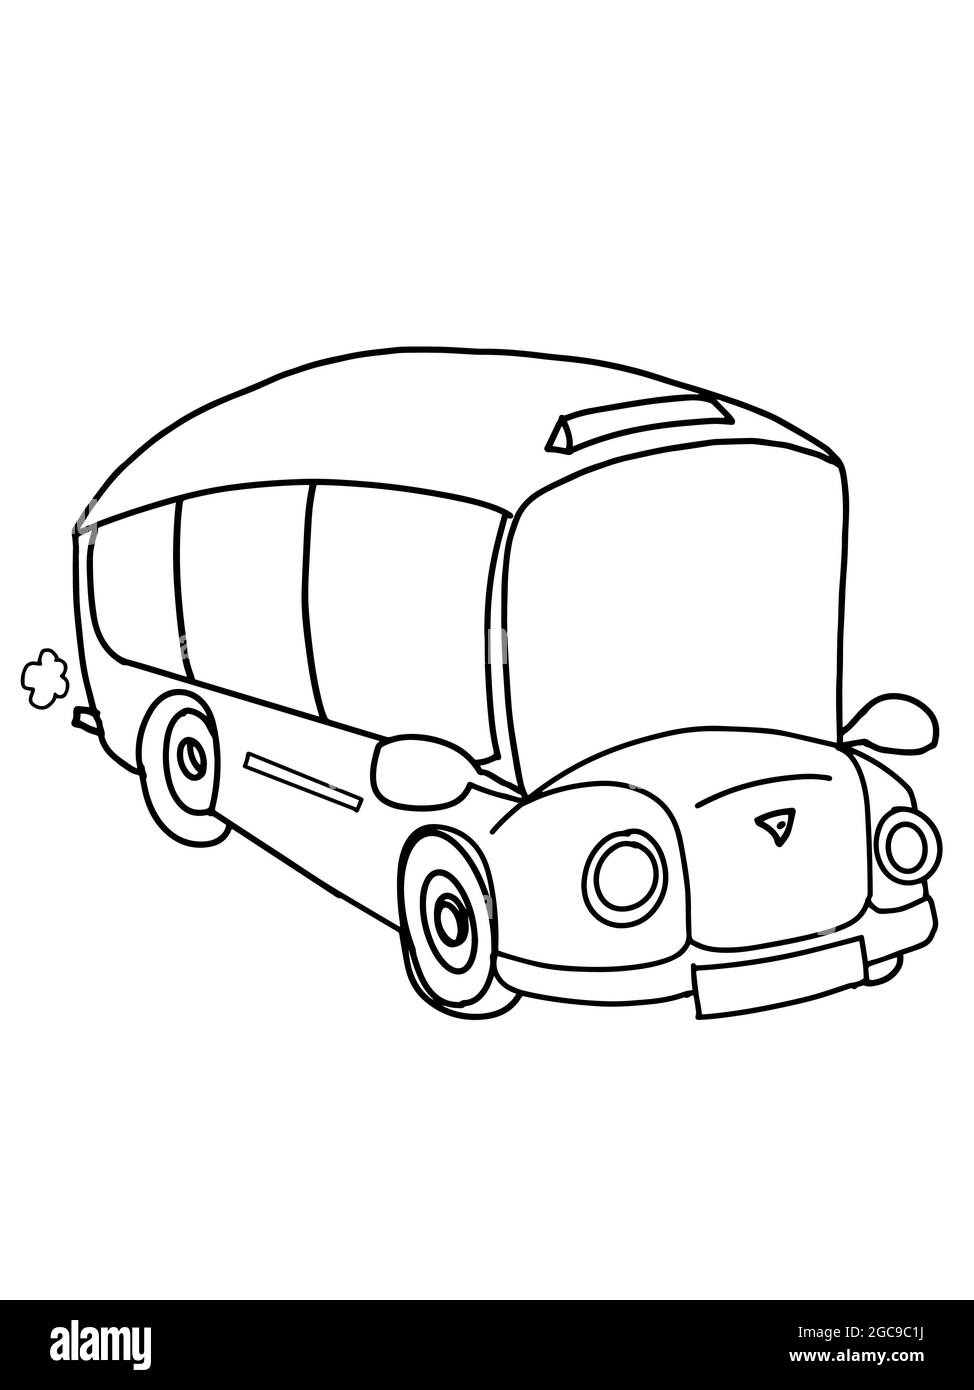 cartoon ,cute school bus, illustration white colors Stock Photo - Alamy